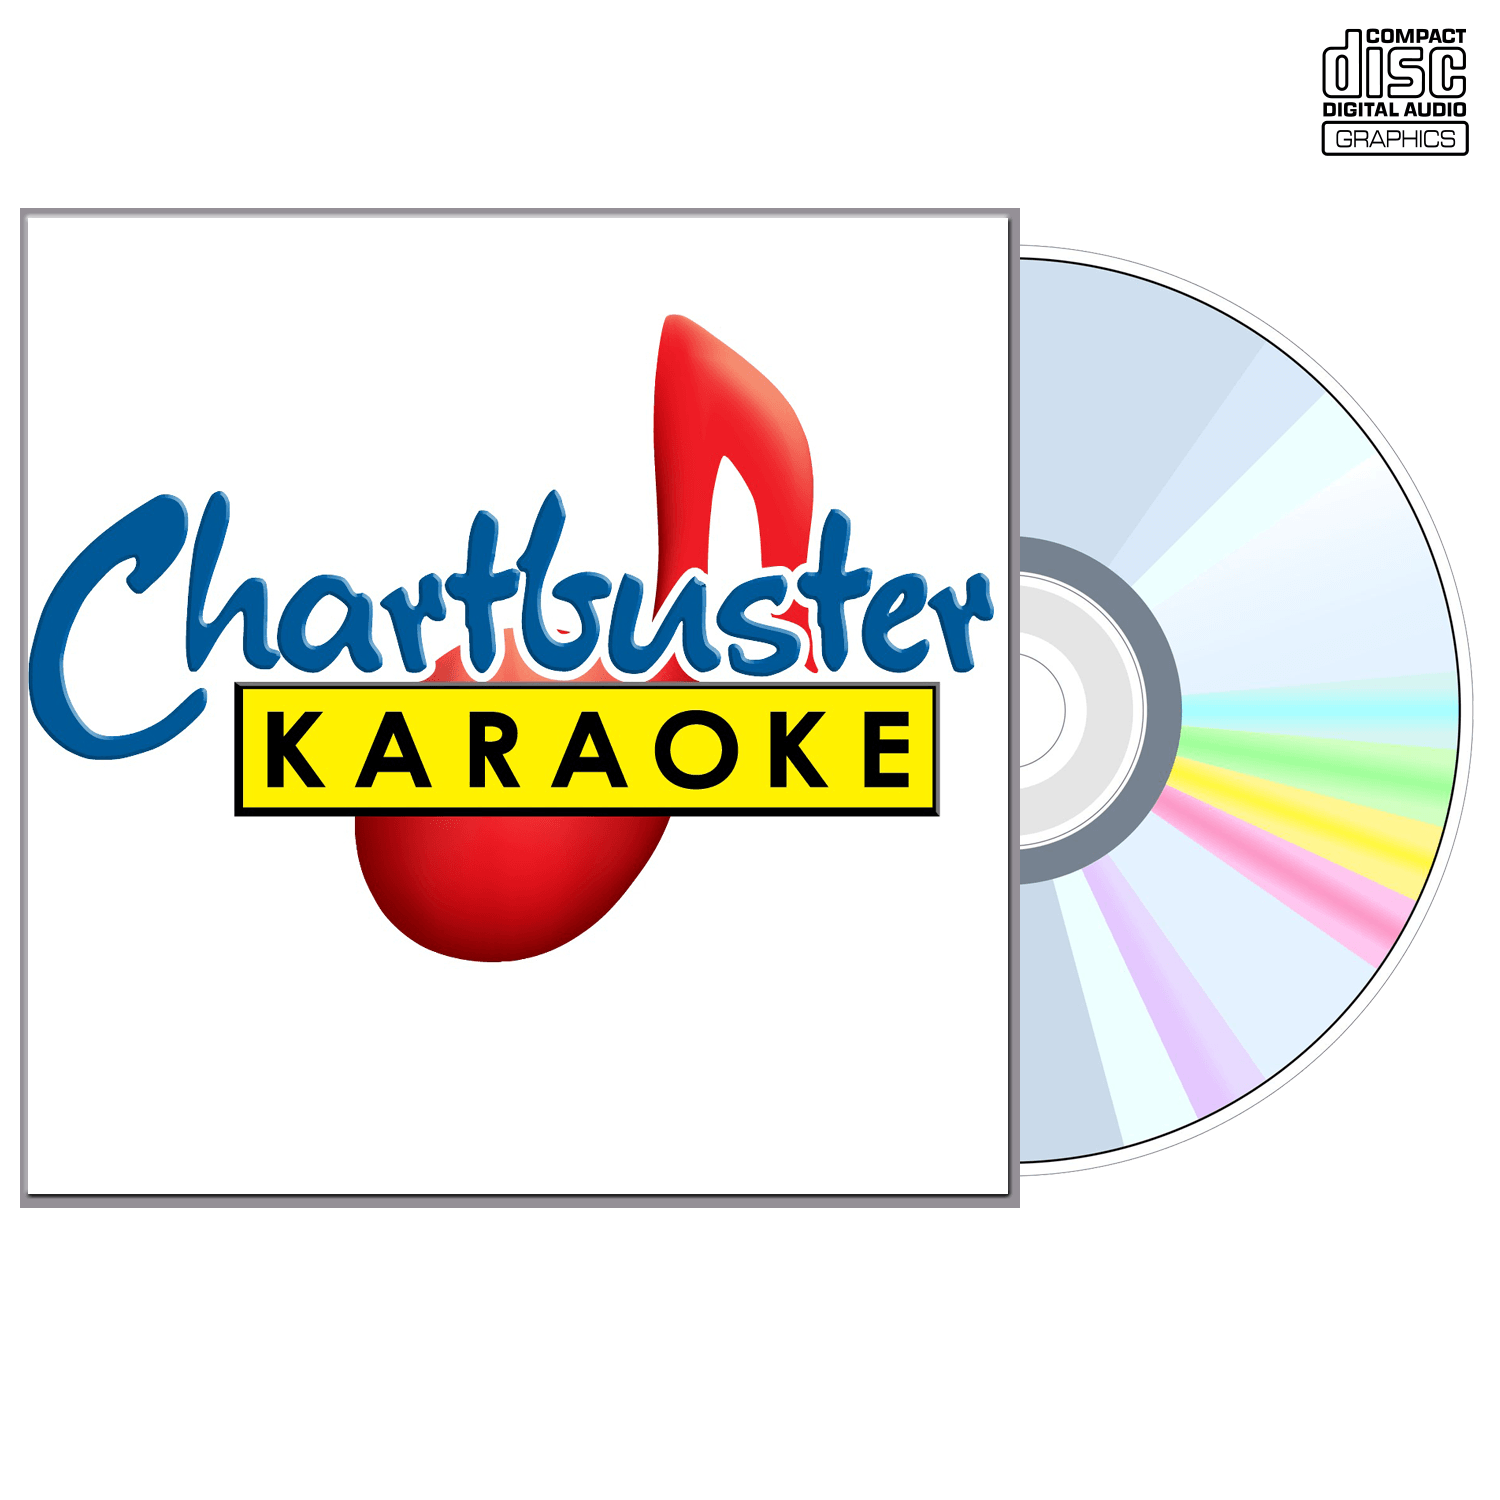 70's Collection Vol 04 - CD+G - Chartbuster Karaoke - Karaoke Home Entertainment